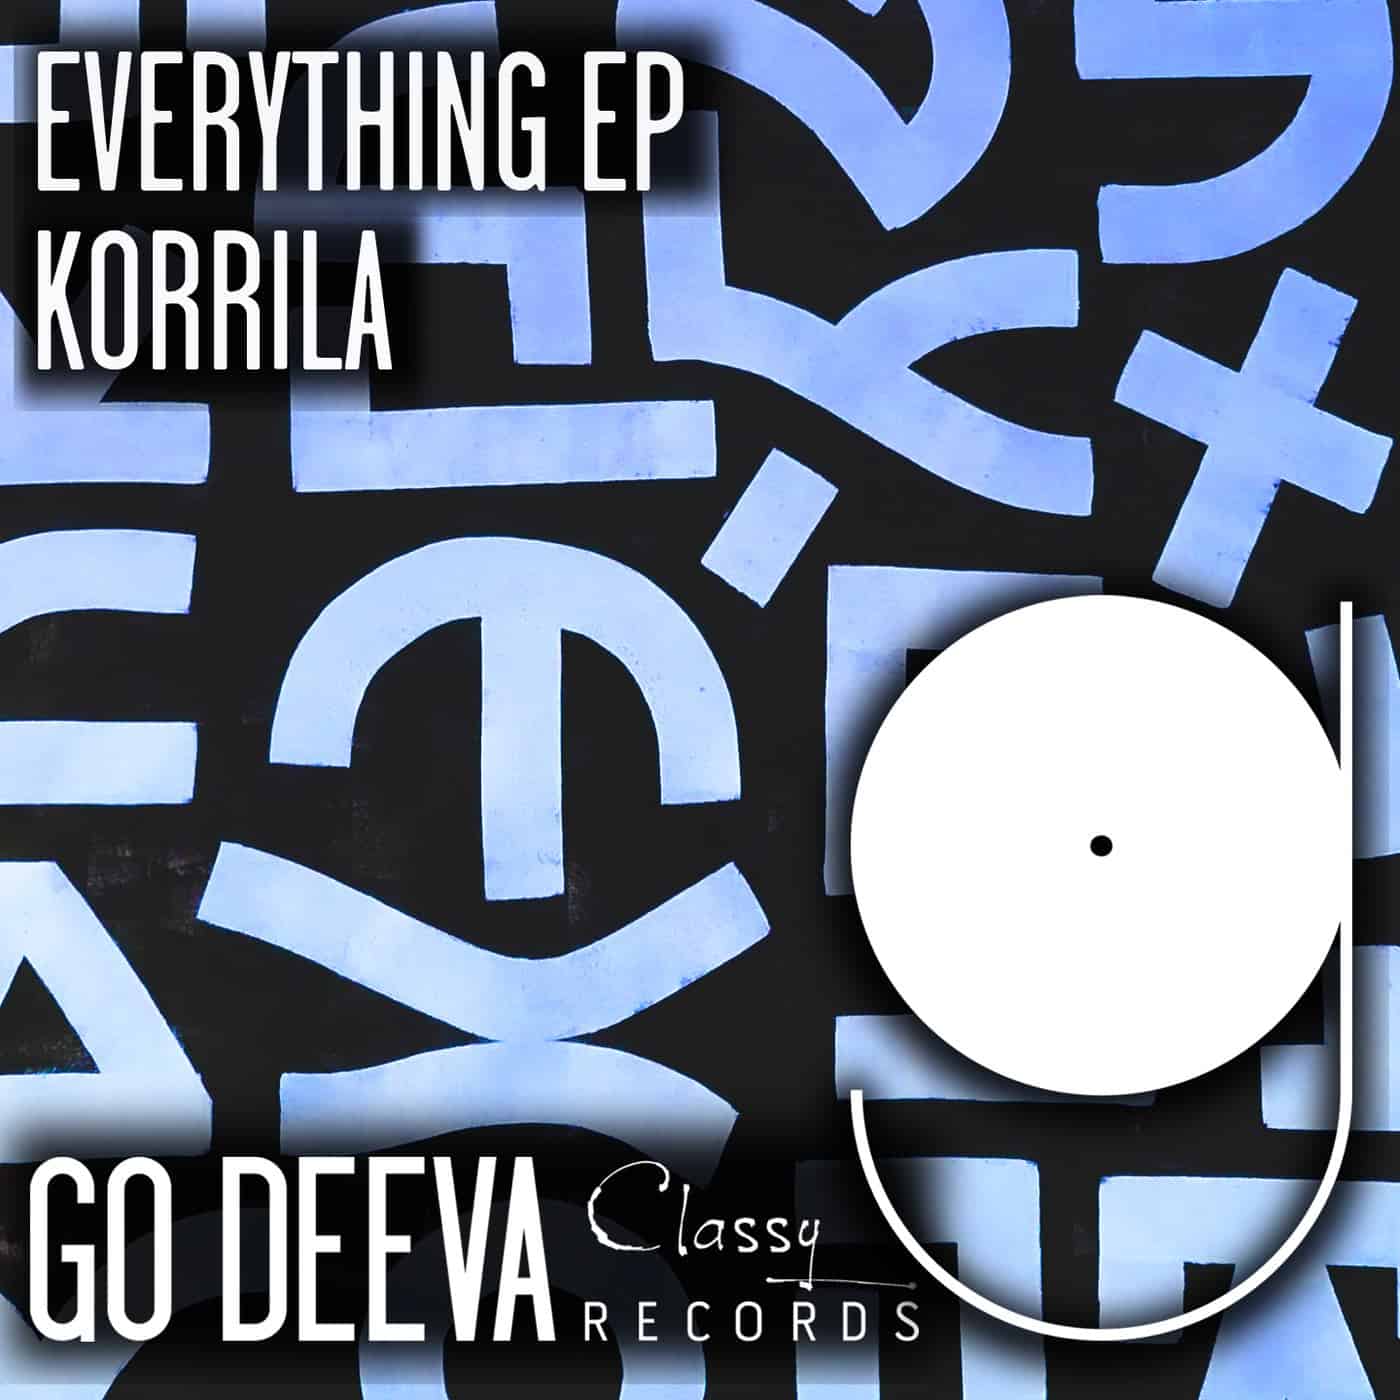 Download Korrila - Everything Ep on Electrobuzz